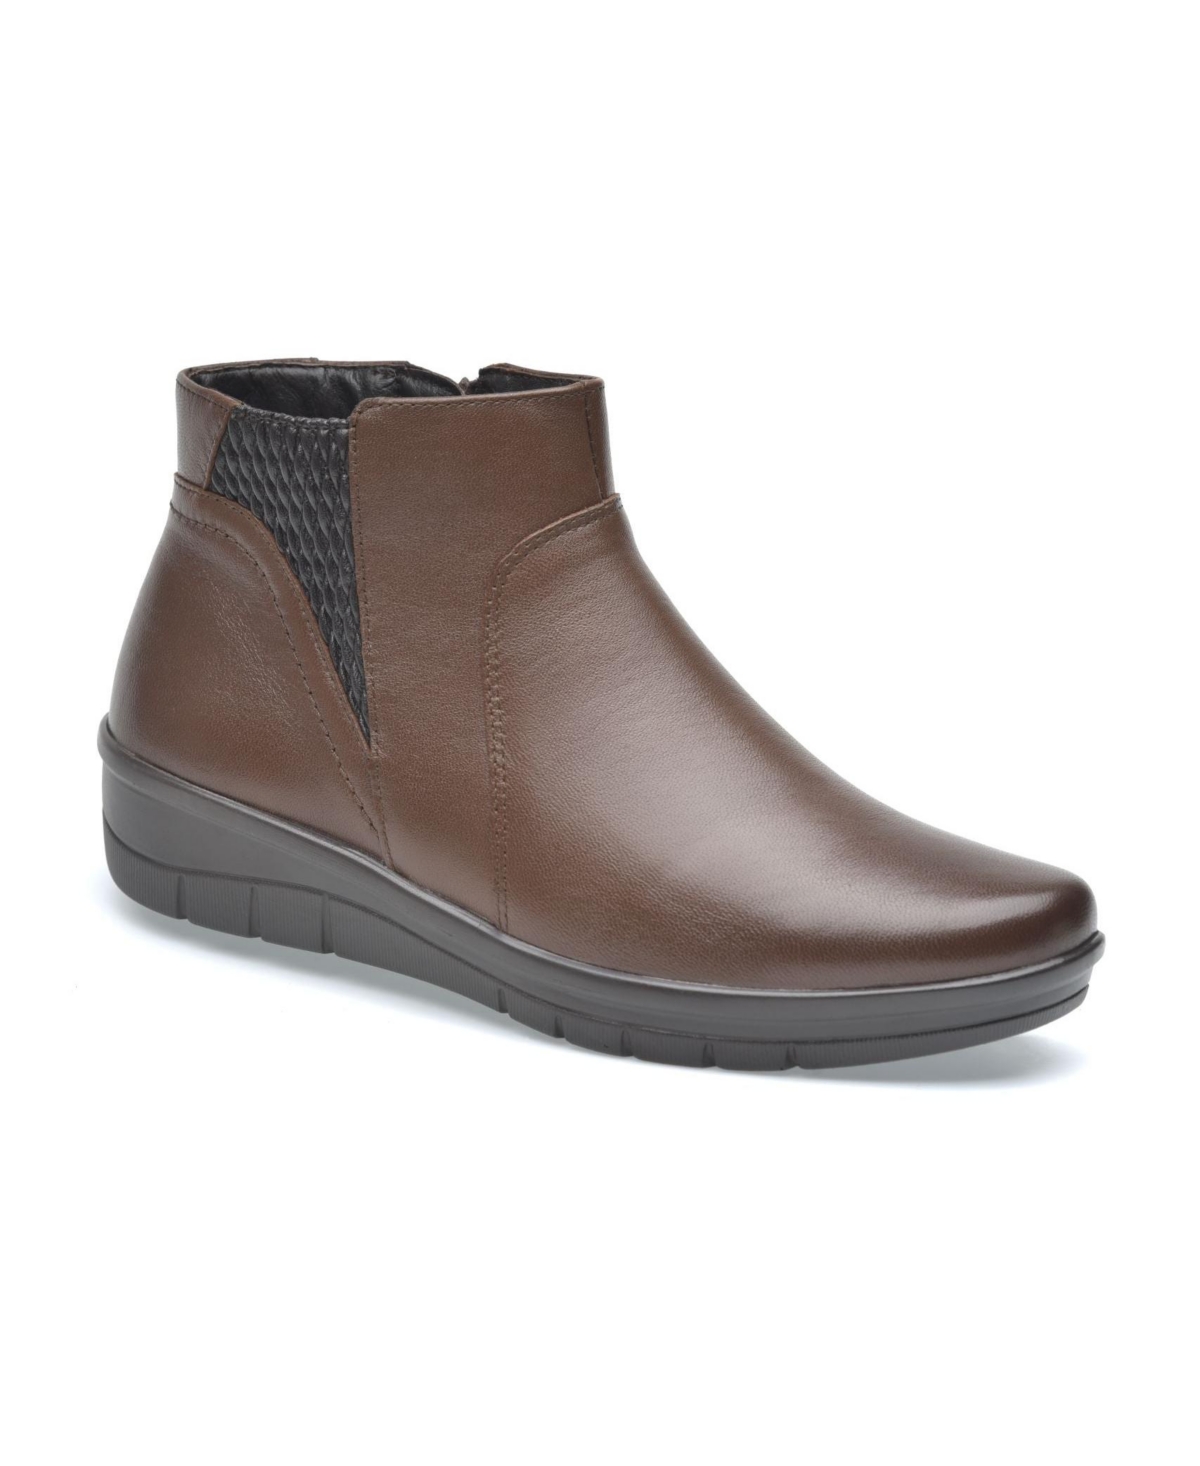 Women's Premium Comfort Leather Boots Dora By - Barista brown